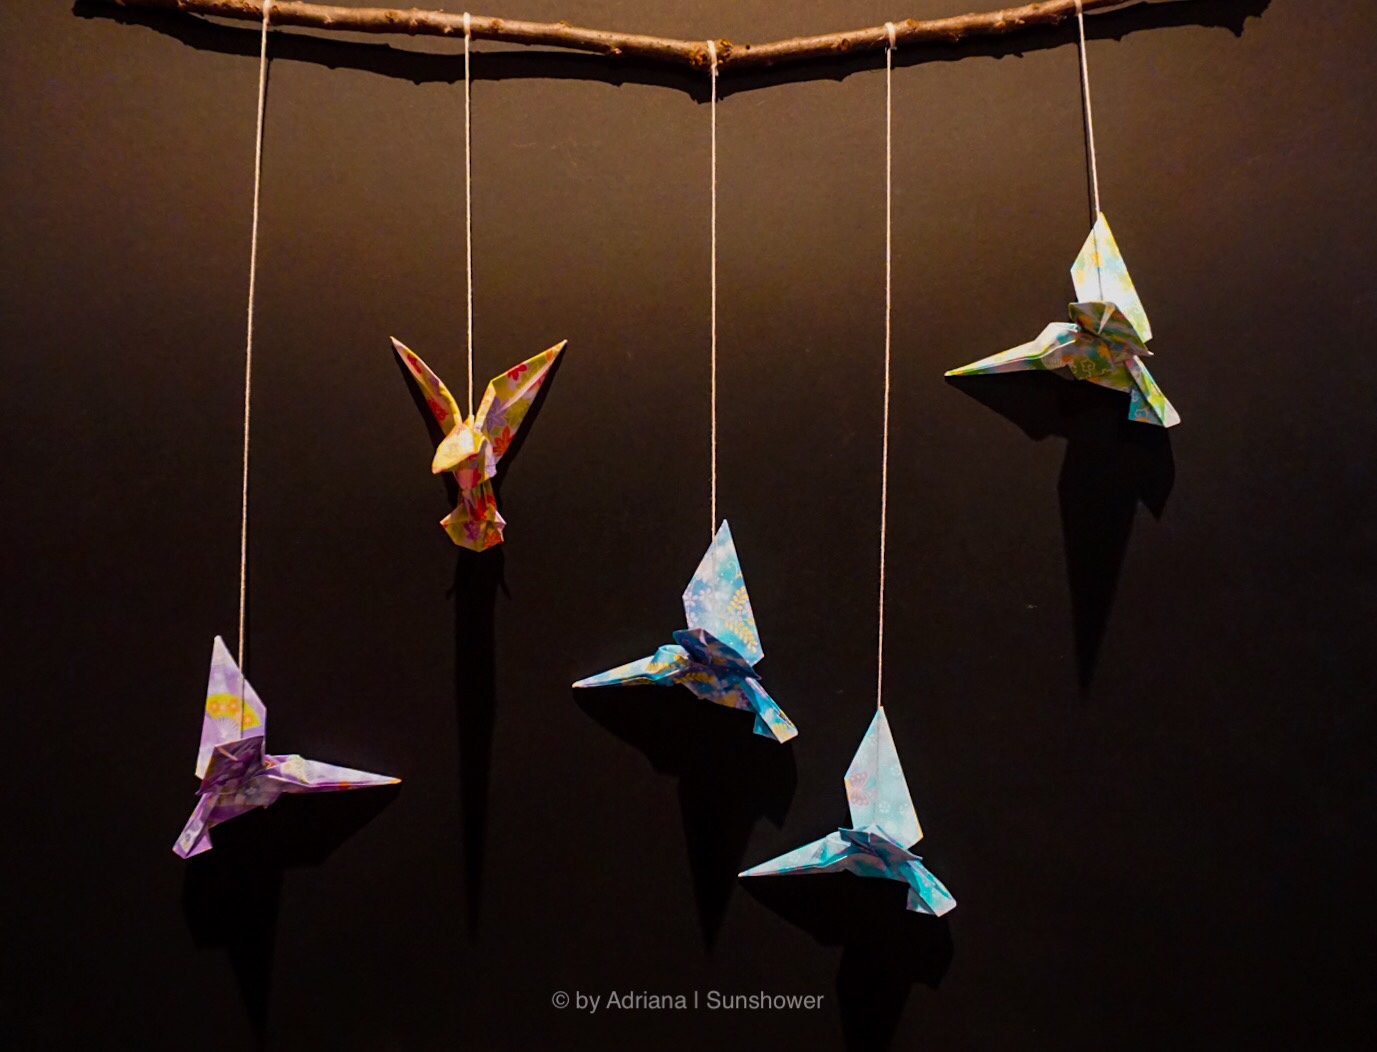 Gallery – Origami Sunshower